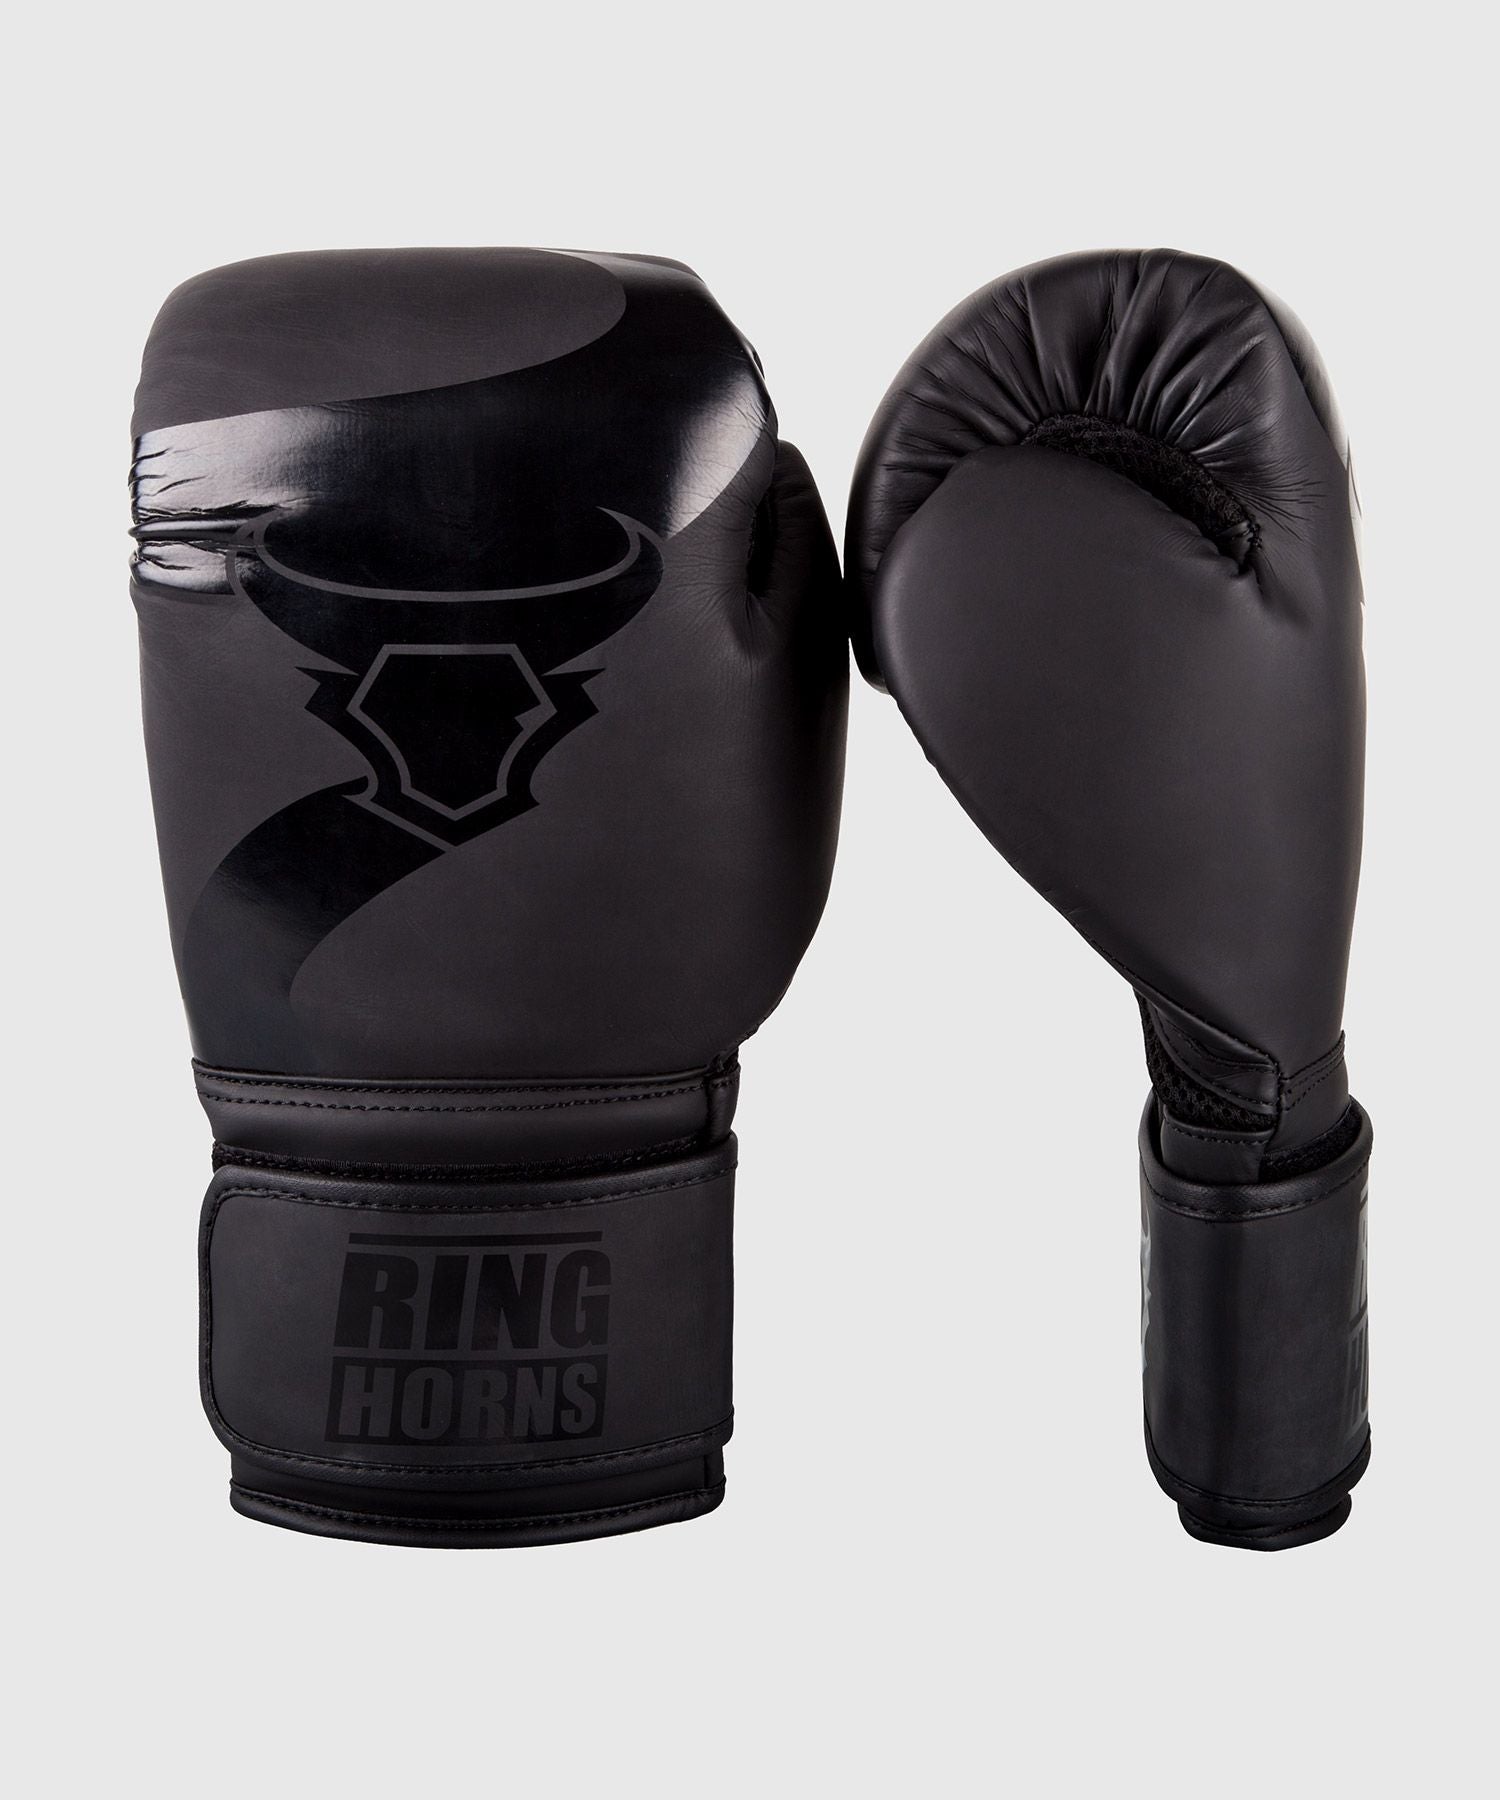 Buy Boxing Machine online